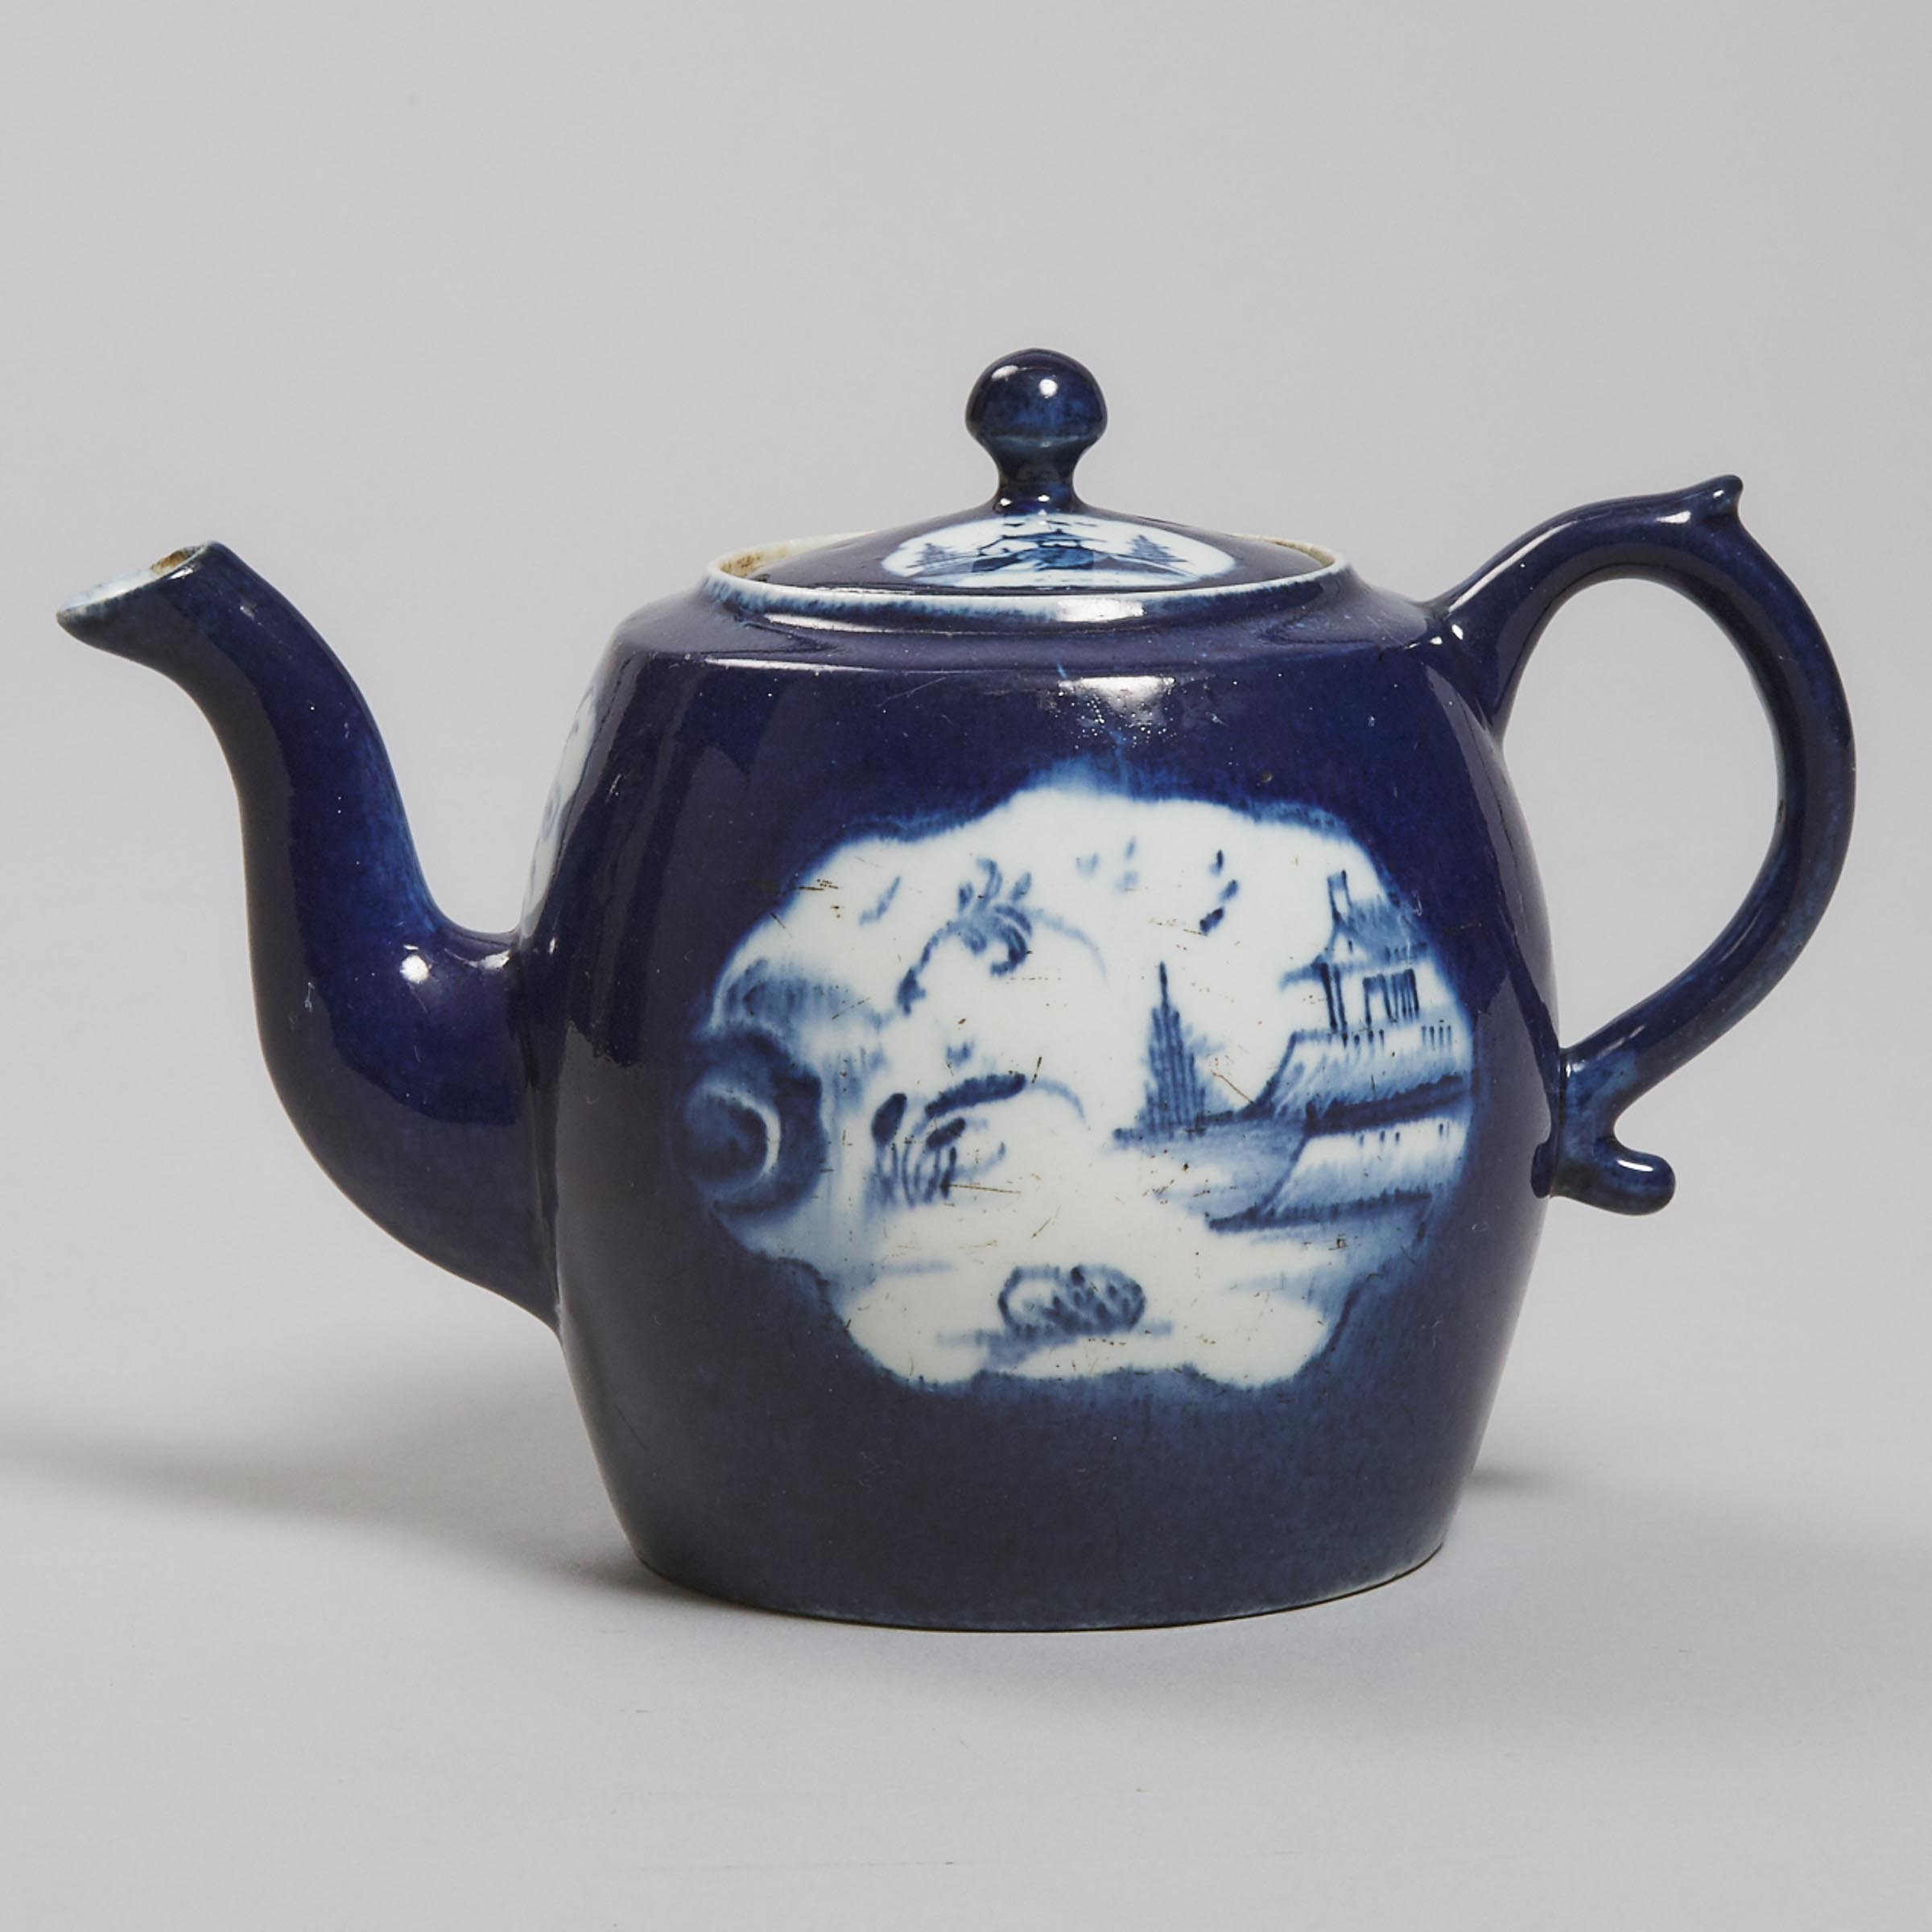 Lowestoft Powder Blue Ground Teapot, c.1770-75